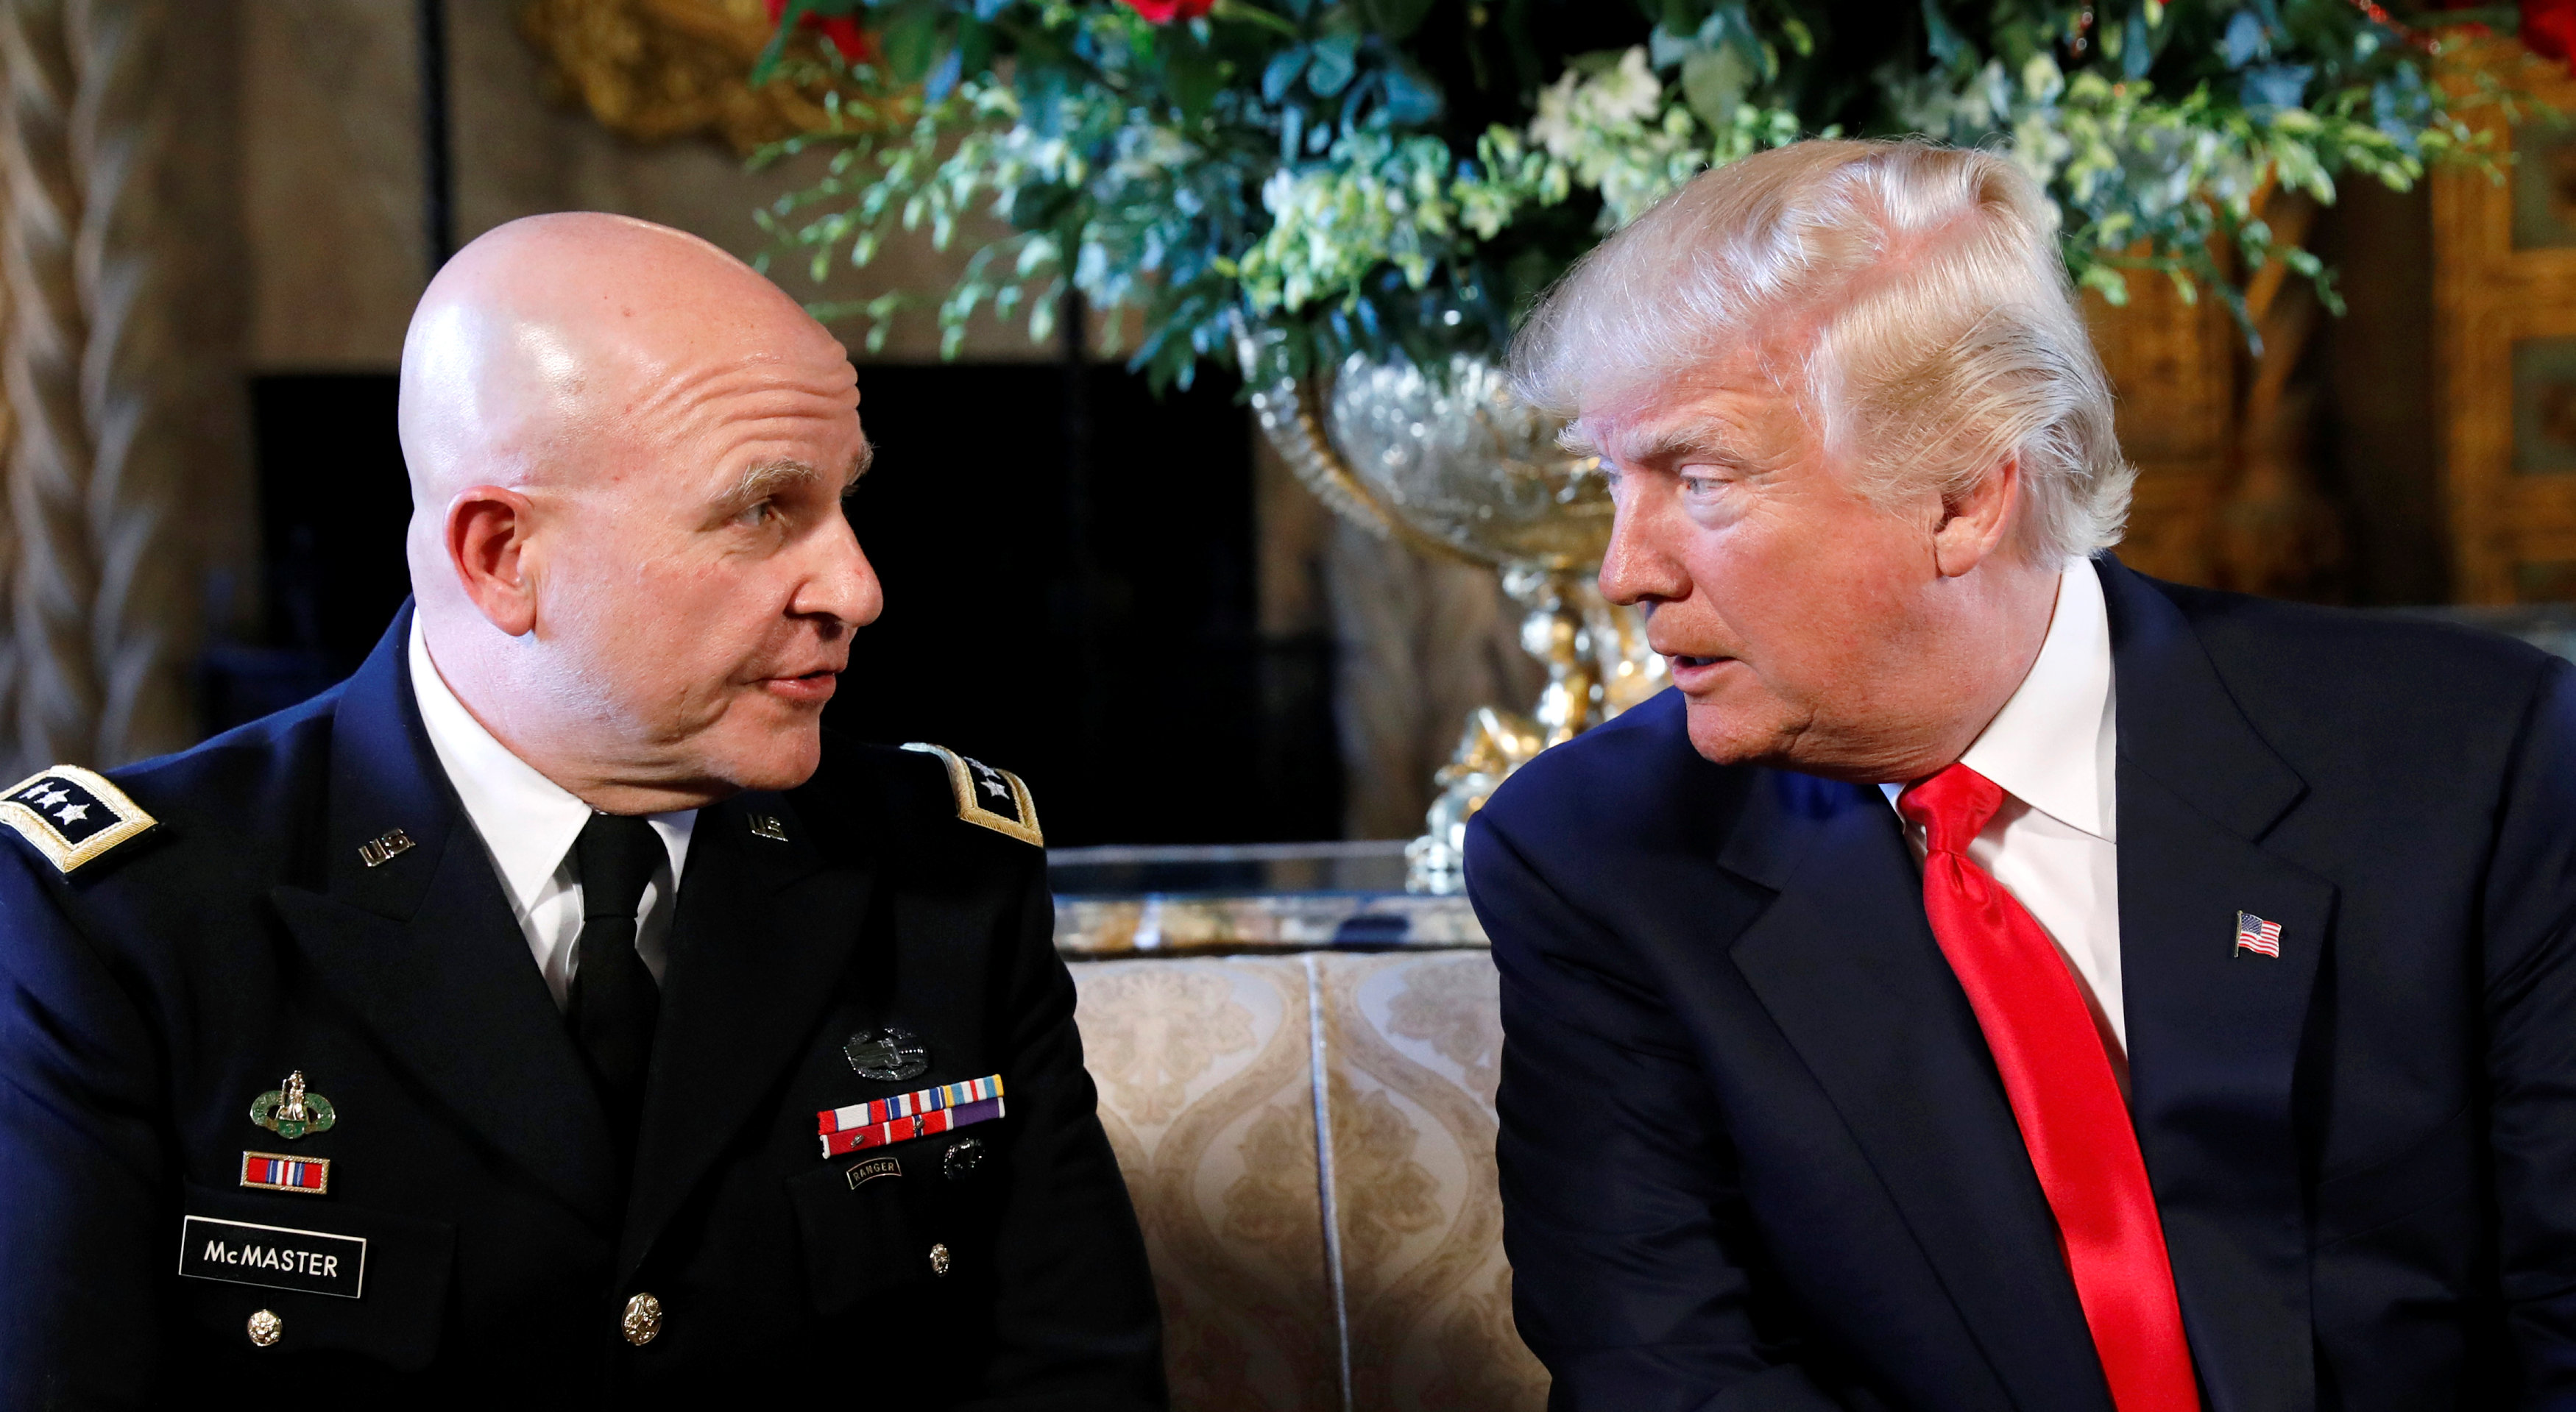 Outspoken general named Trump's top security adviser